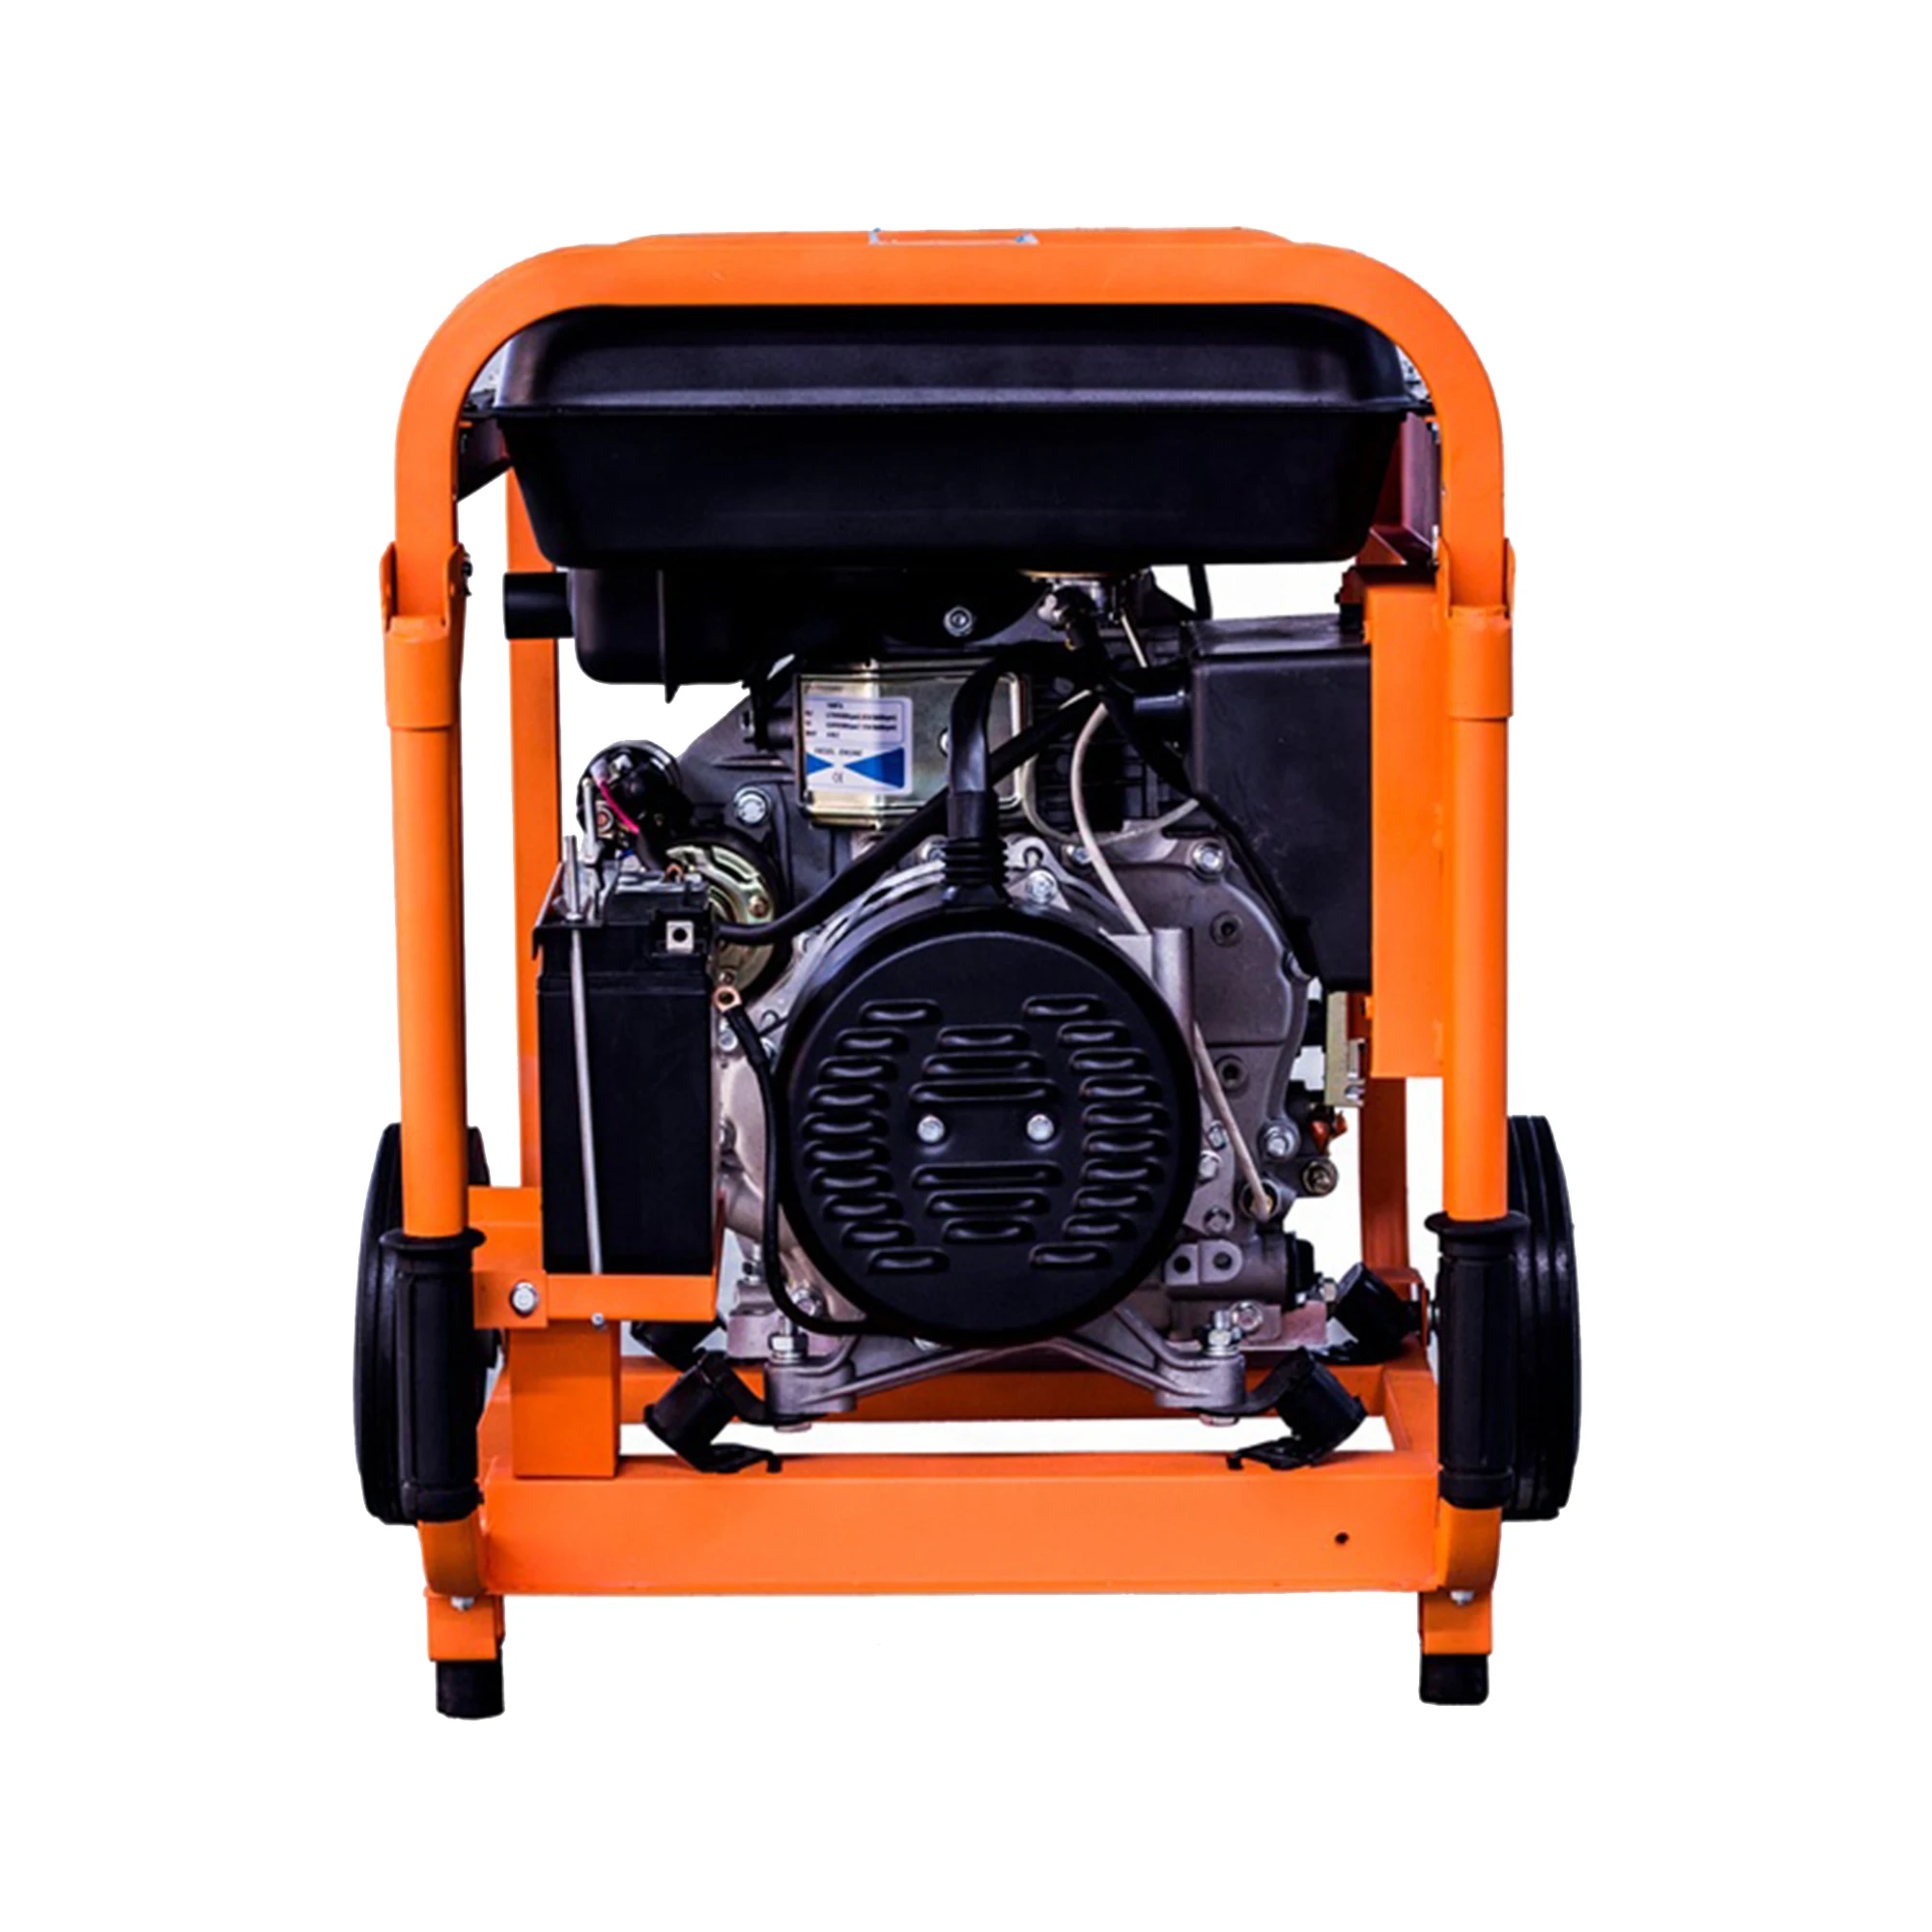 28'L 6KW Diesel Generators Engine Electrical Open Type, Portable Power Generator Electricity Generation Warehouse